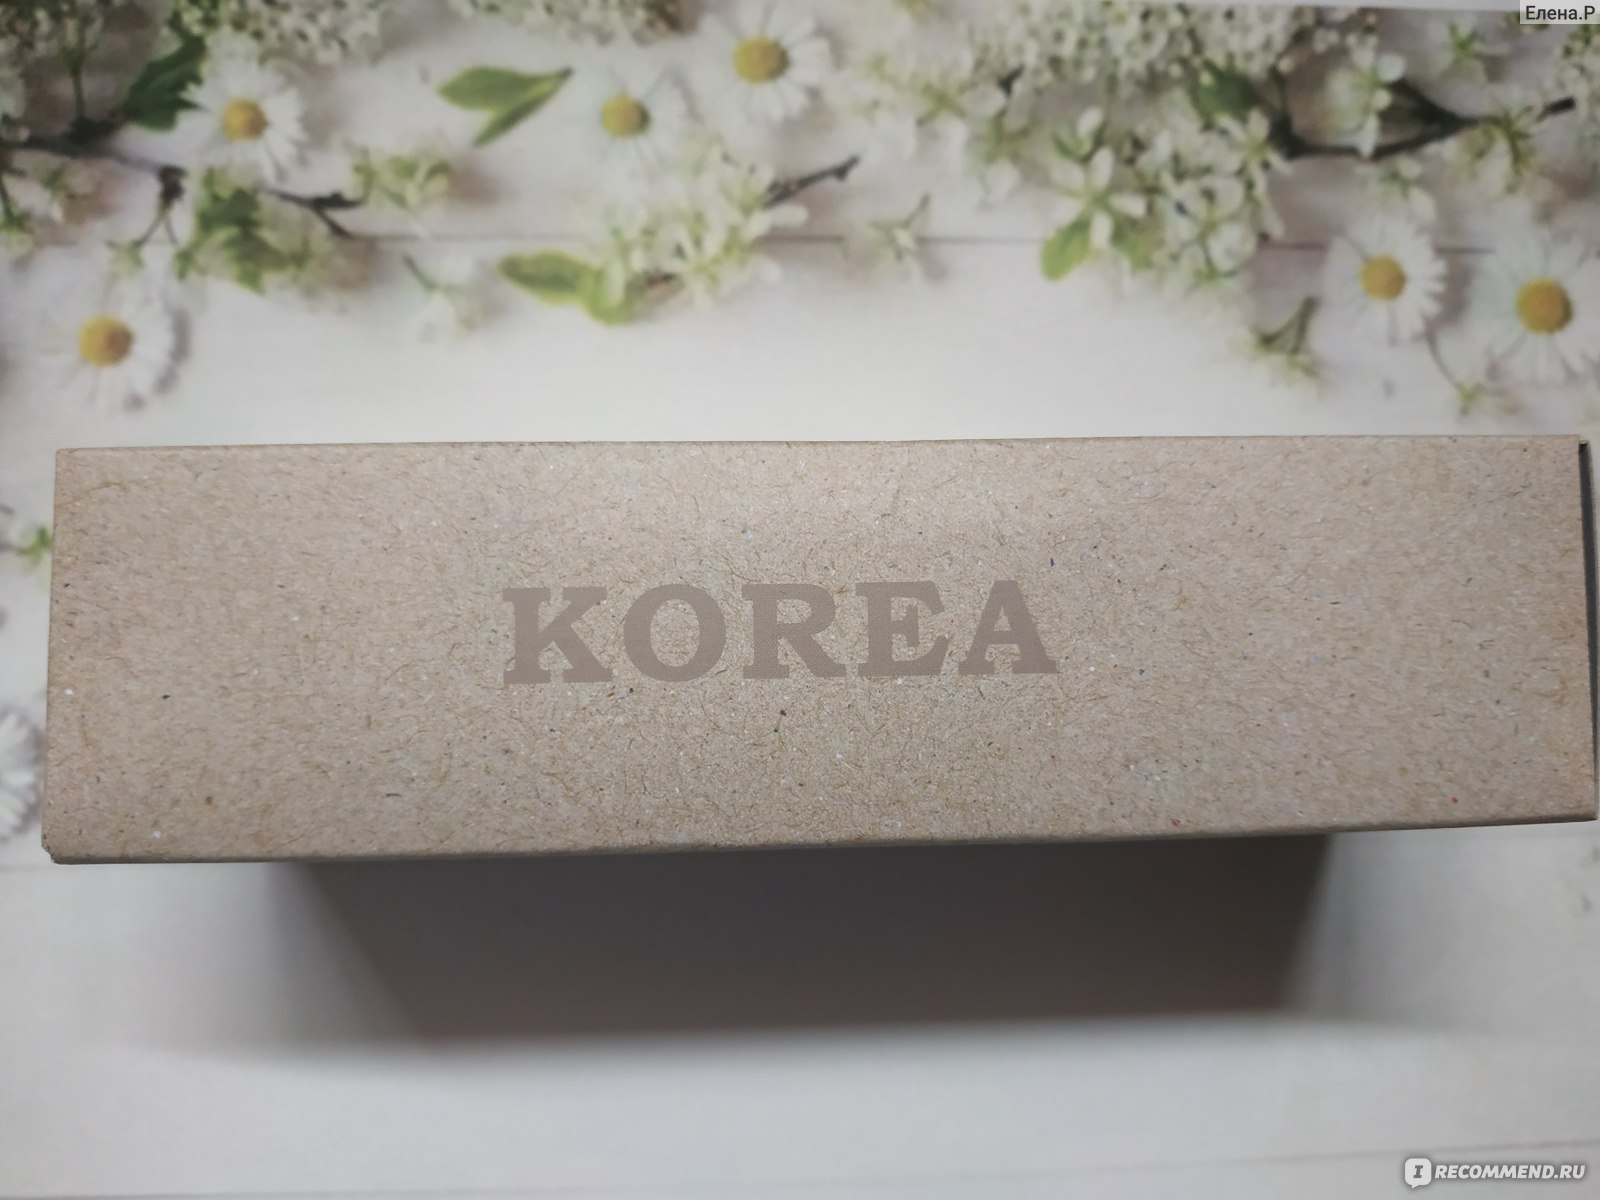 Made in Korea